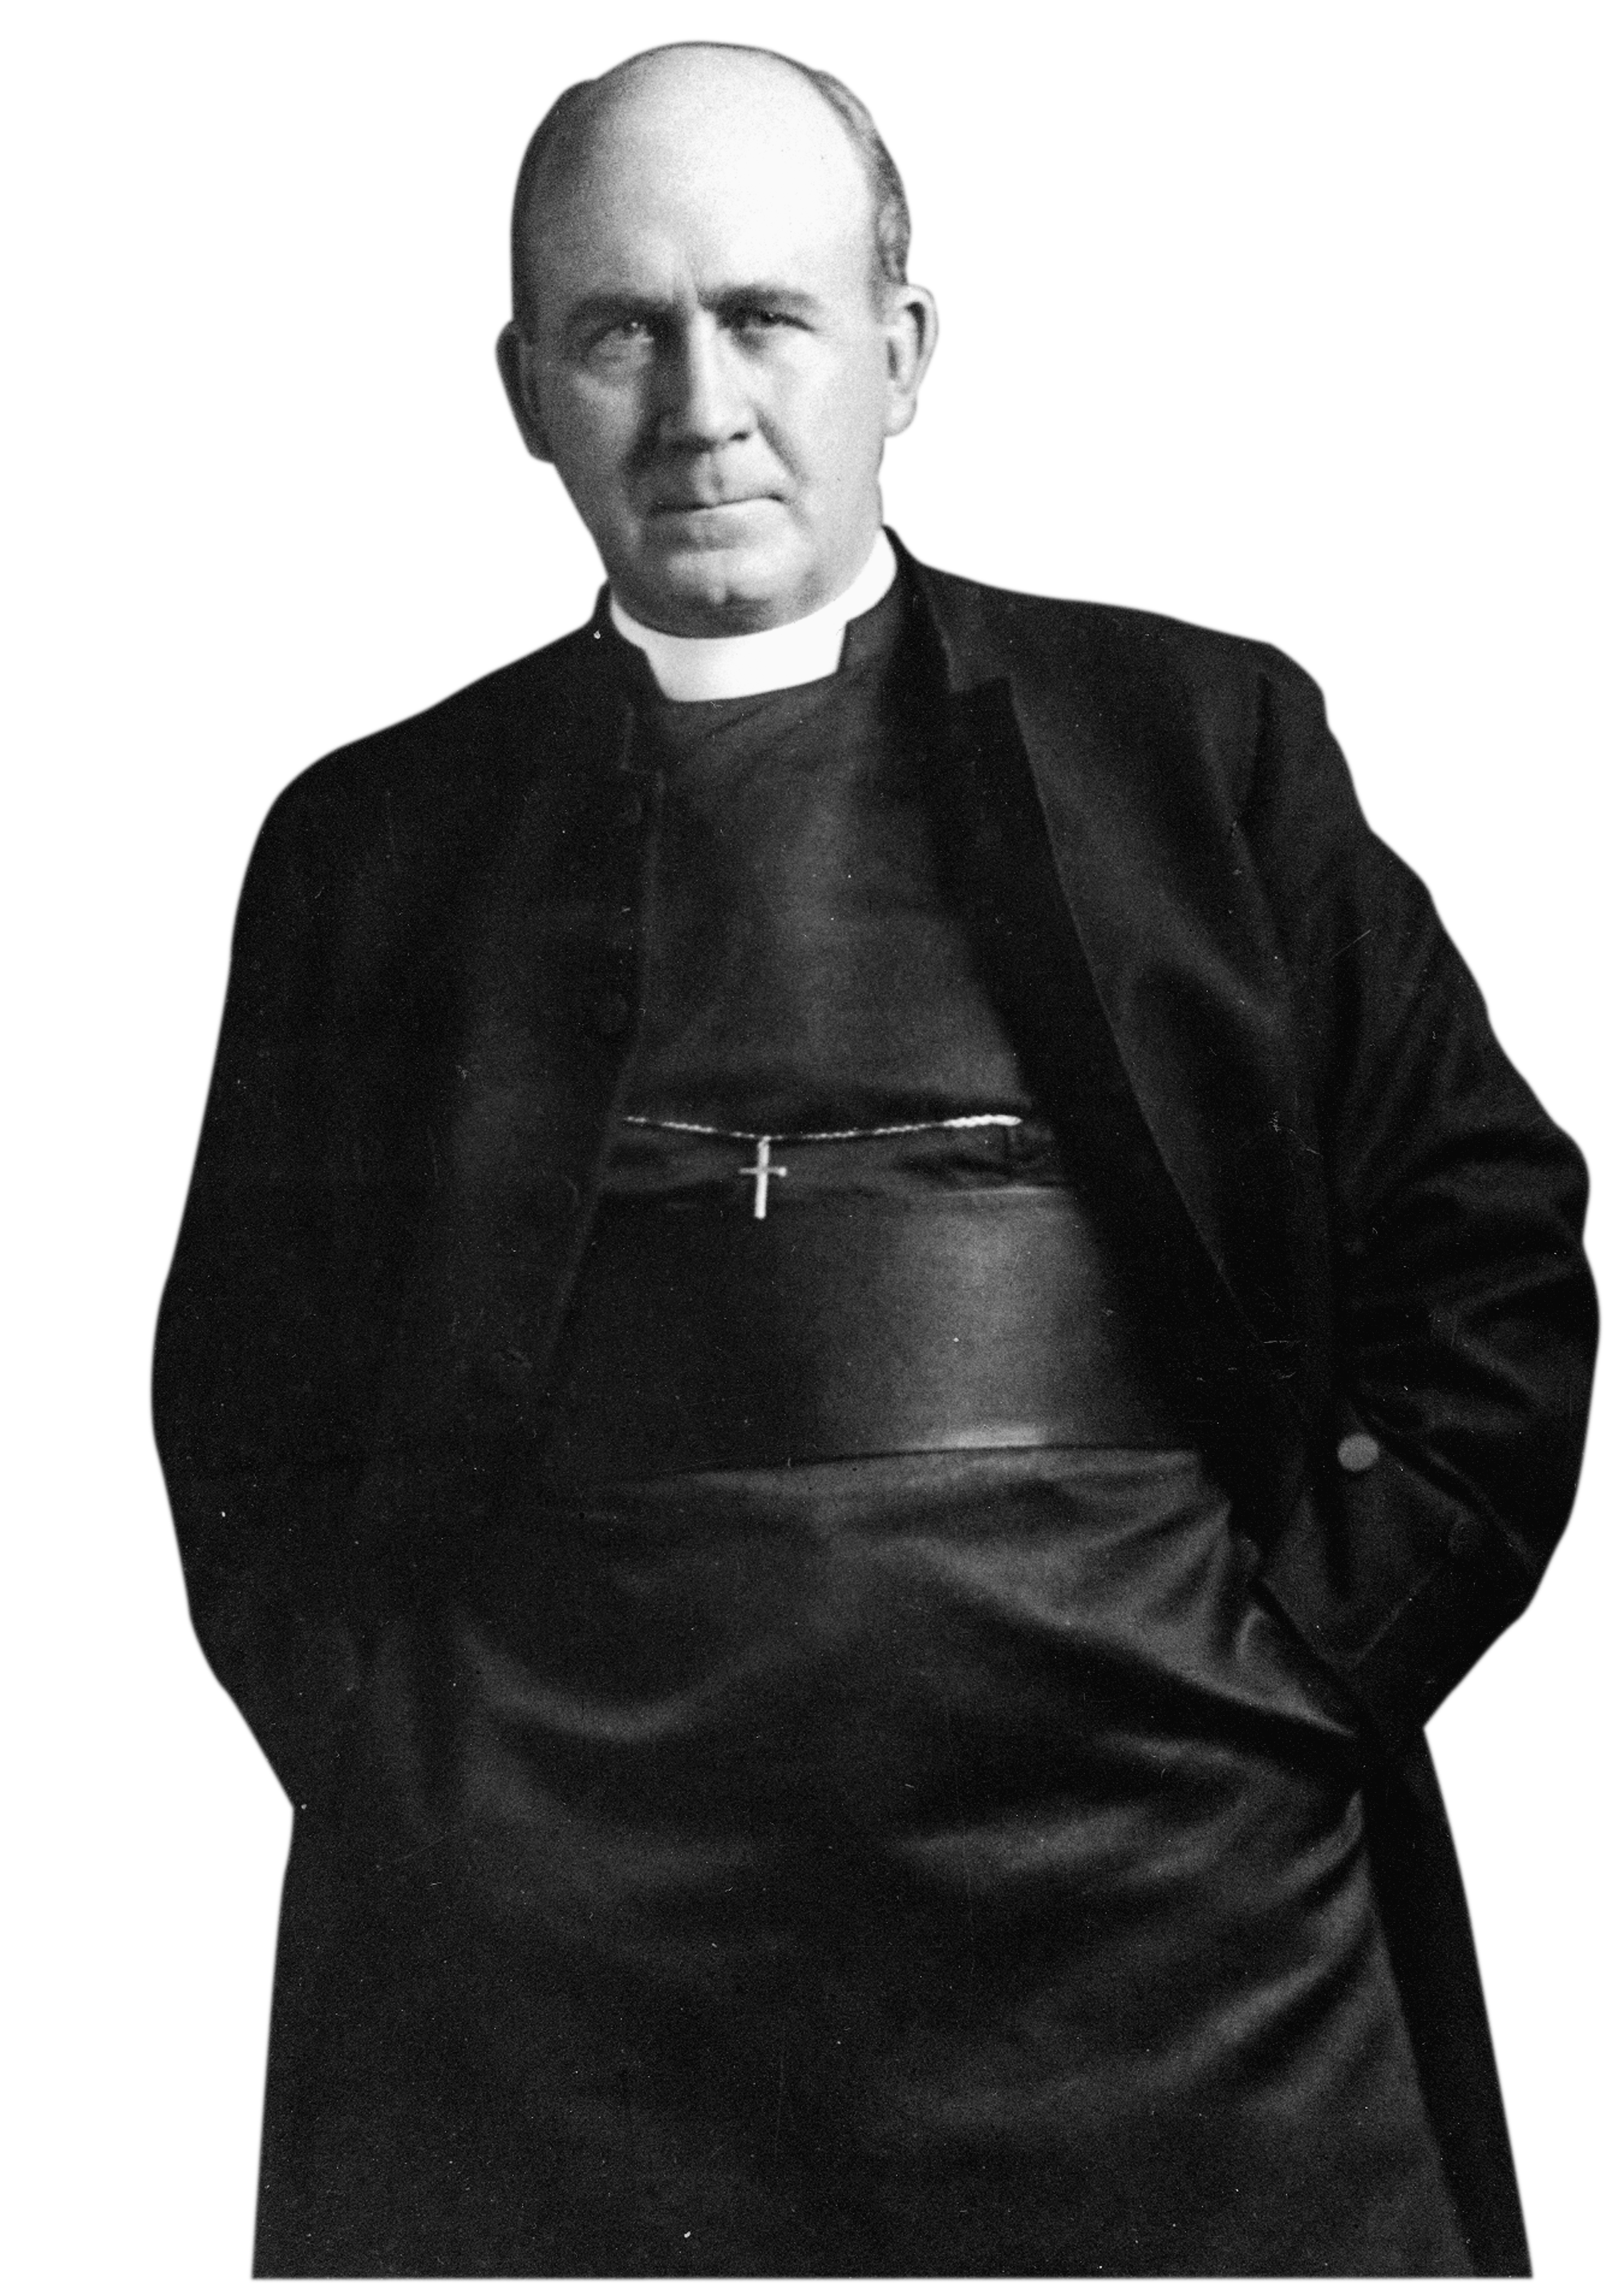 The Most Rev. Robert John Renison